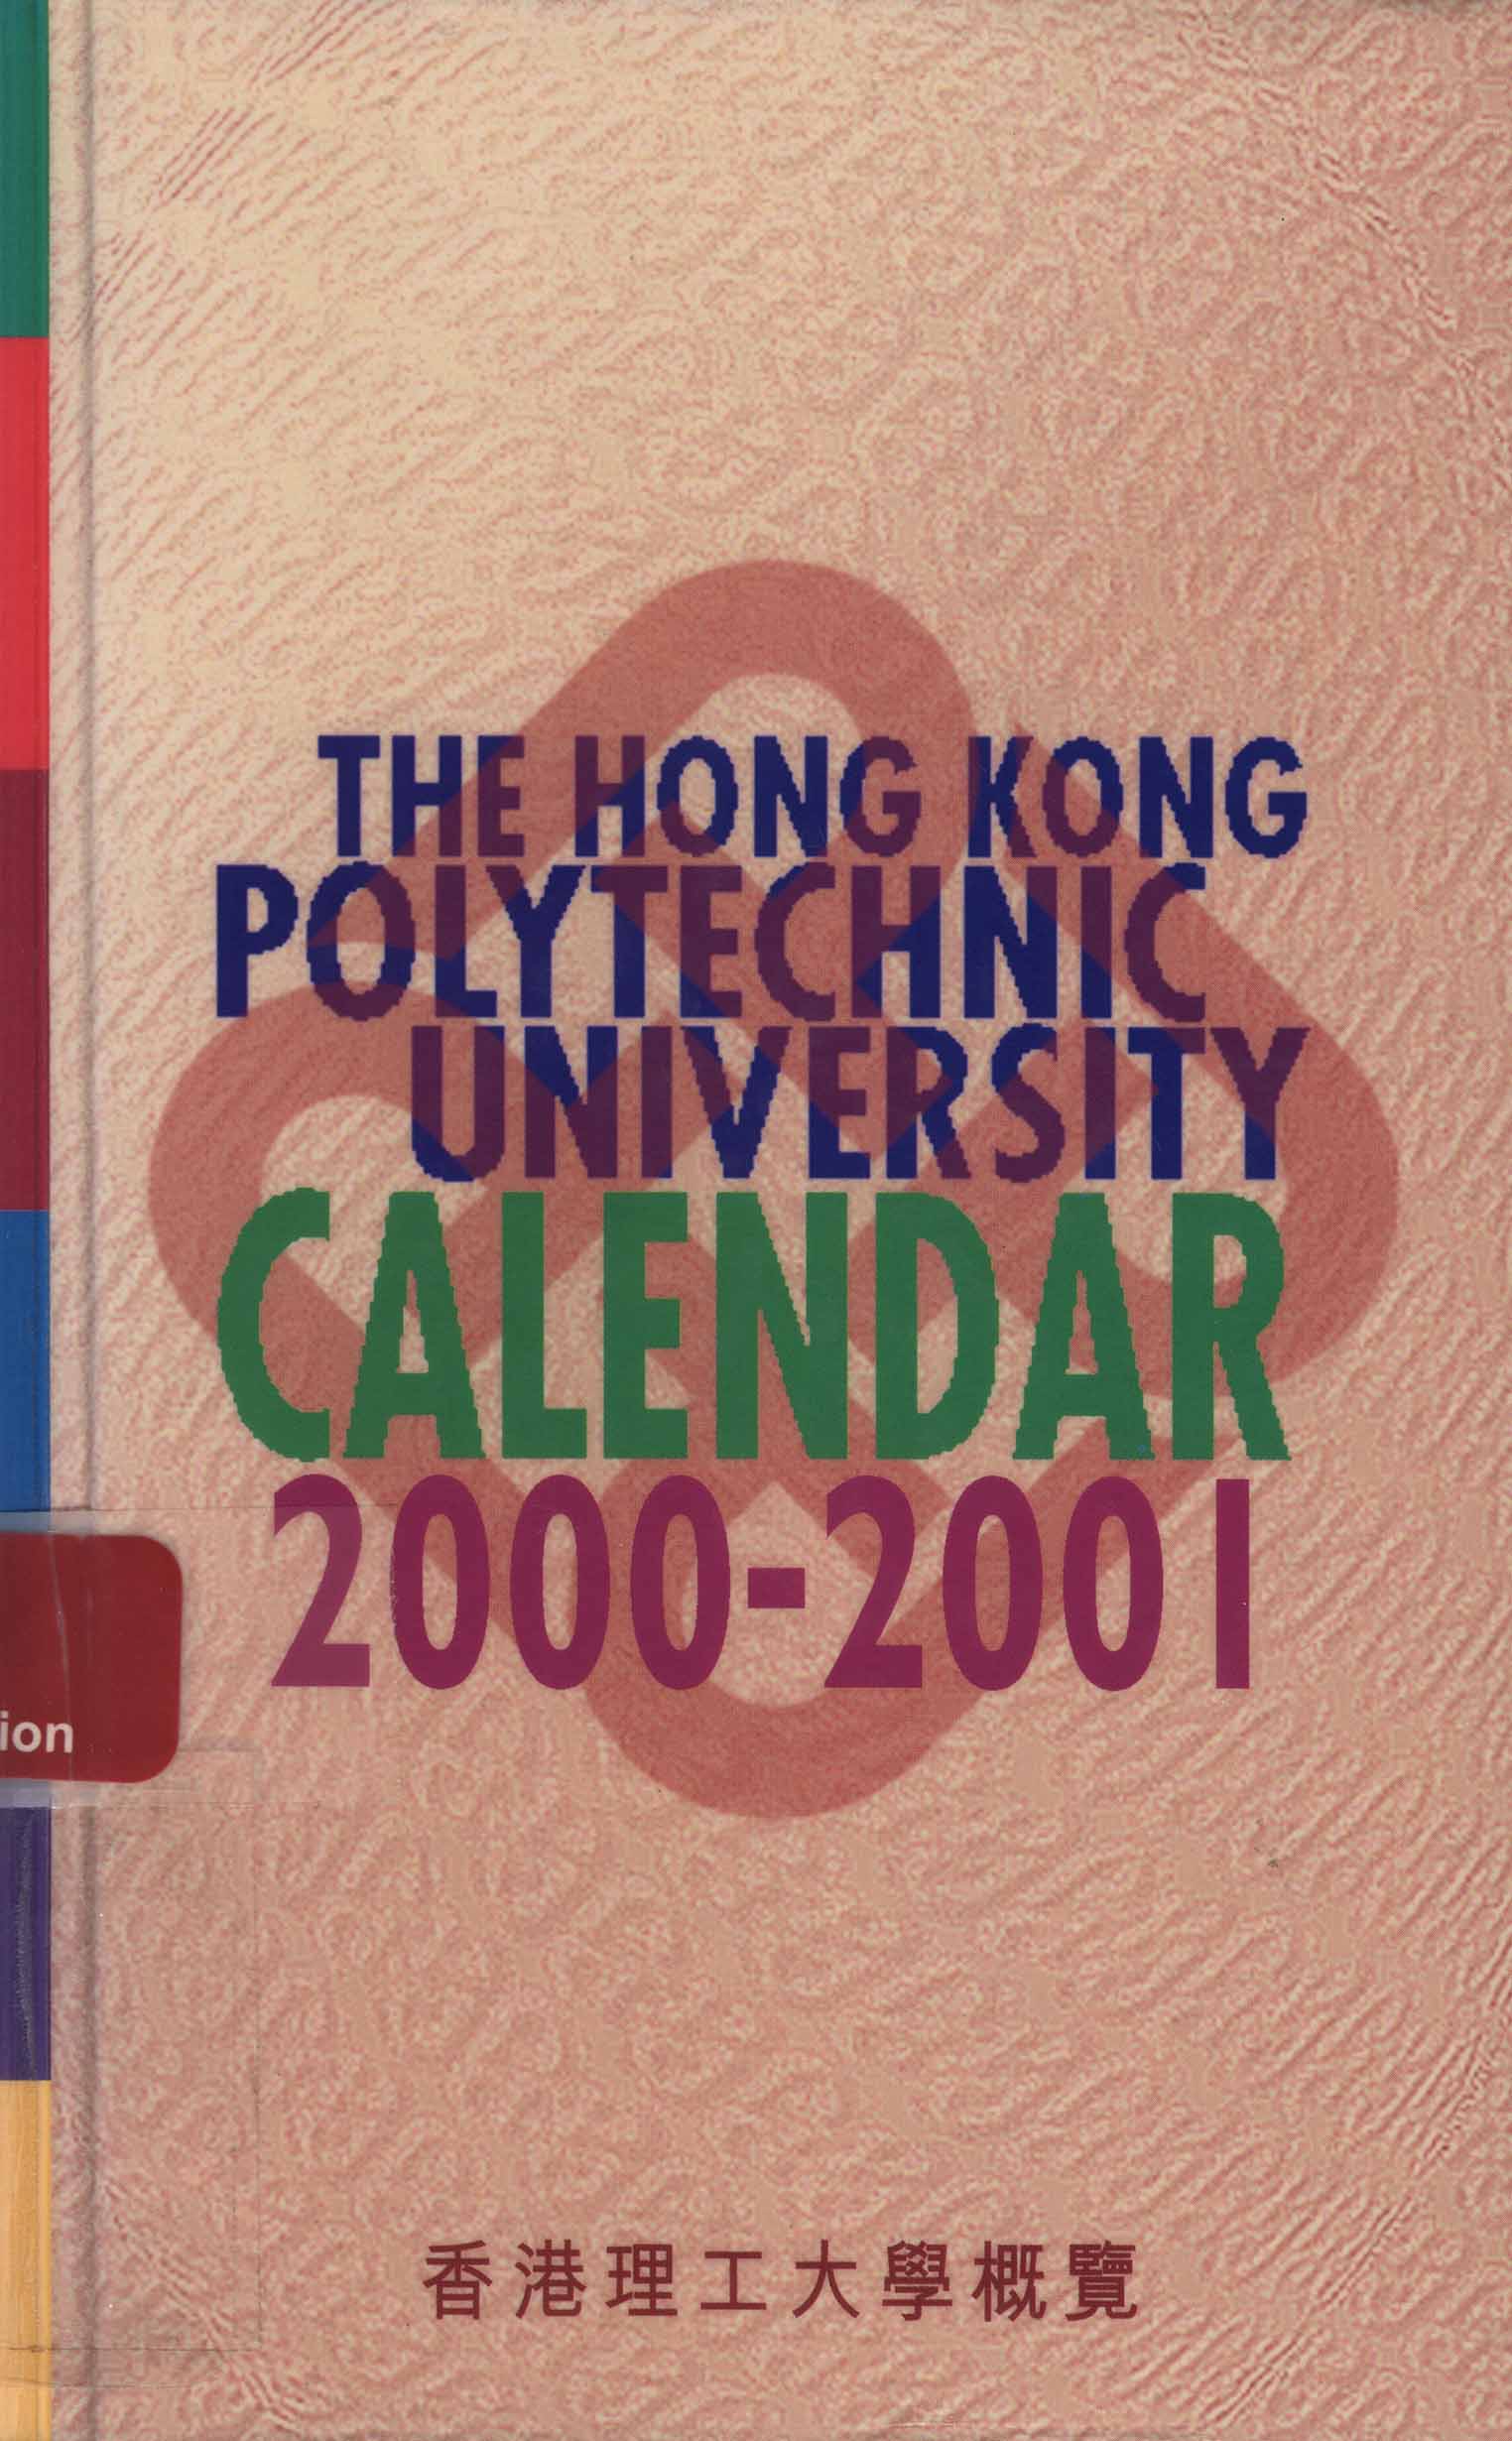 The Hong Kong Polytechnic University Calendar [2000-2001]